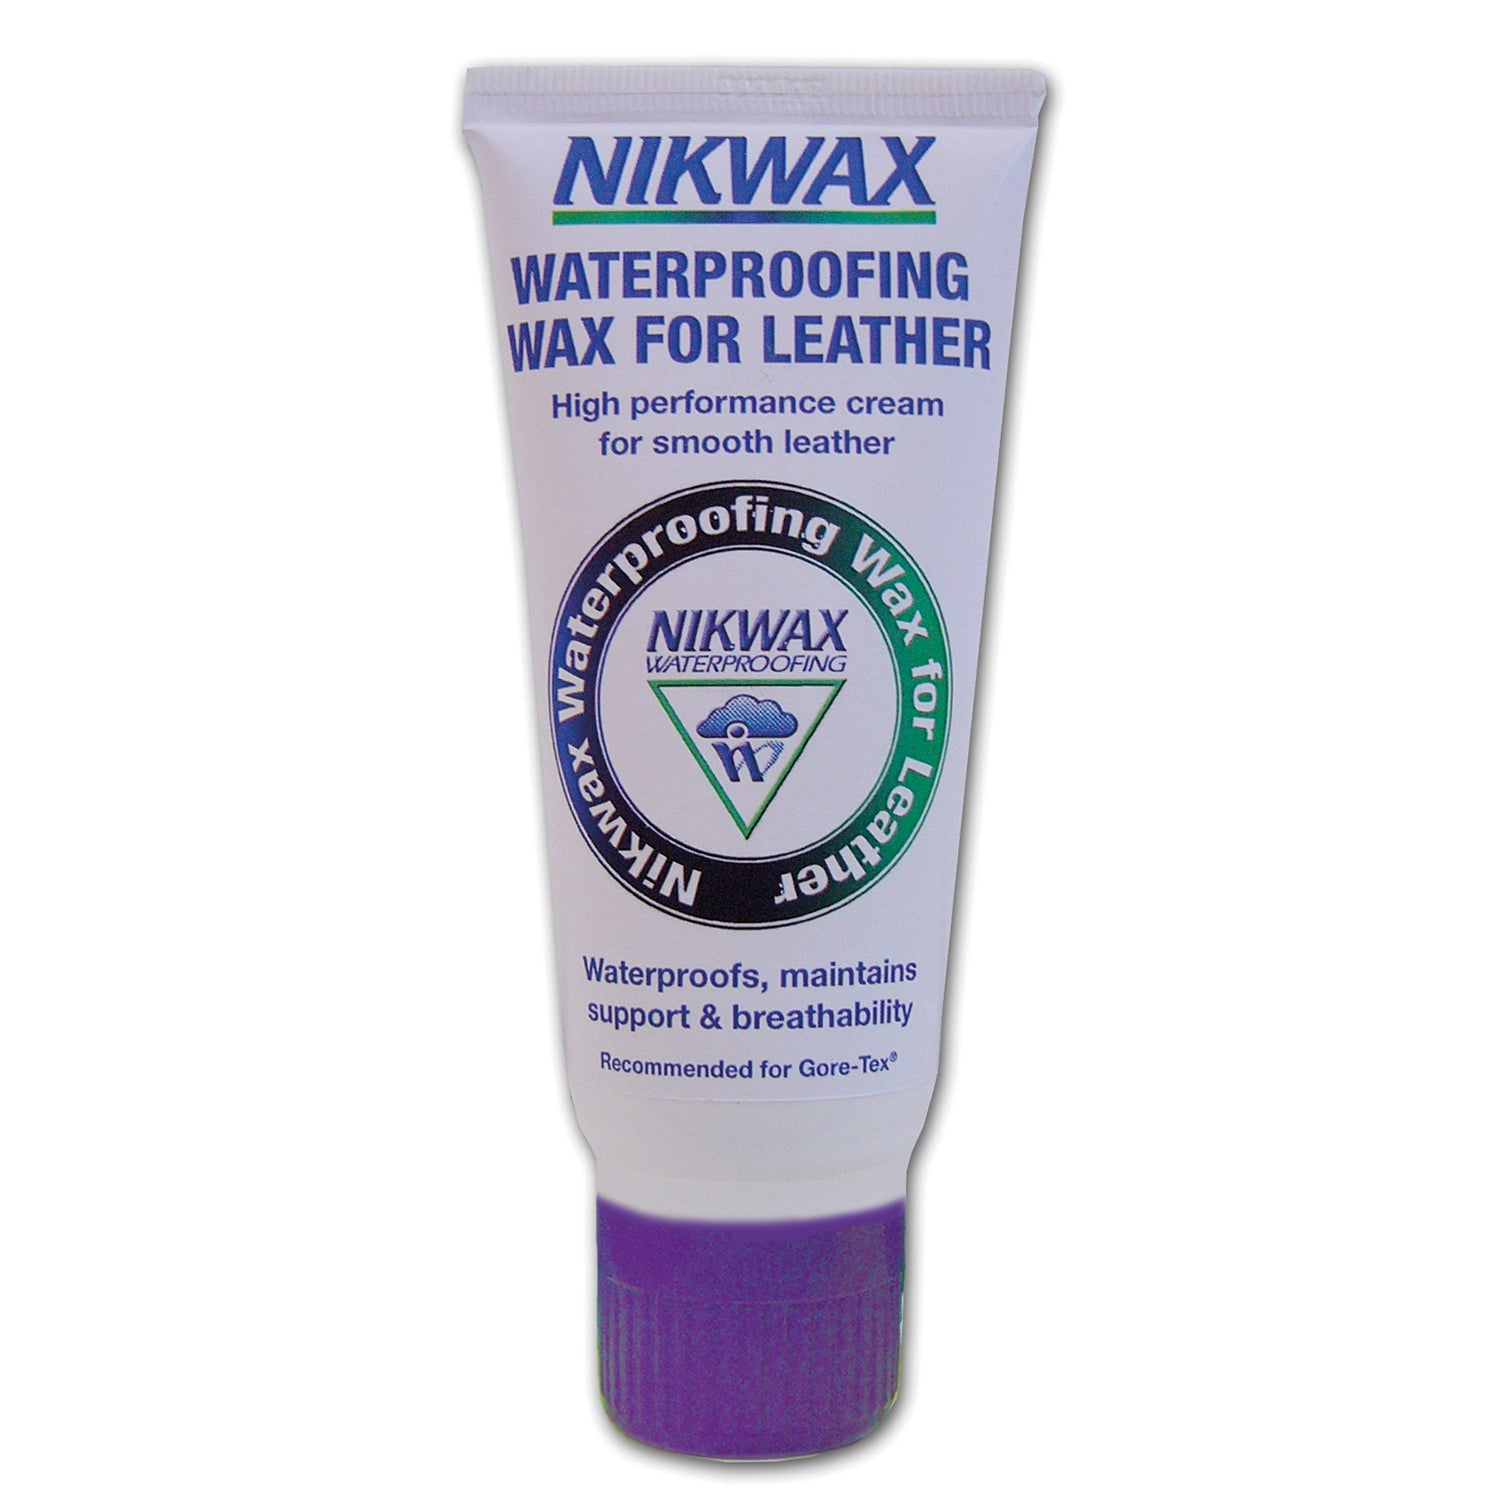 Nikwax Waterproofing Wax For Leather Cream